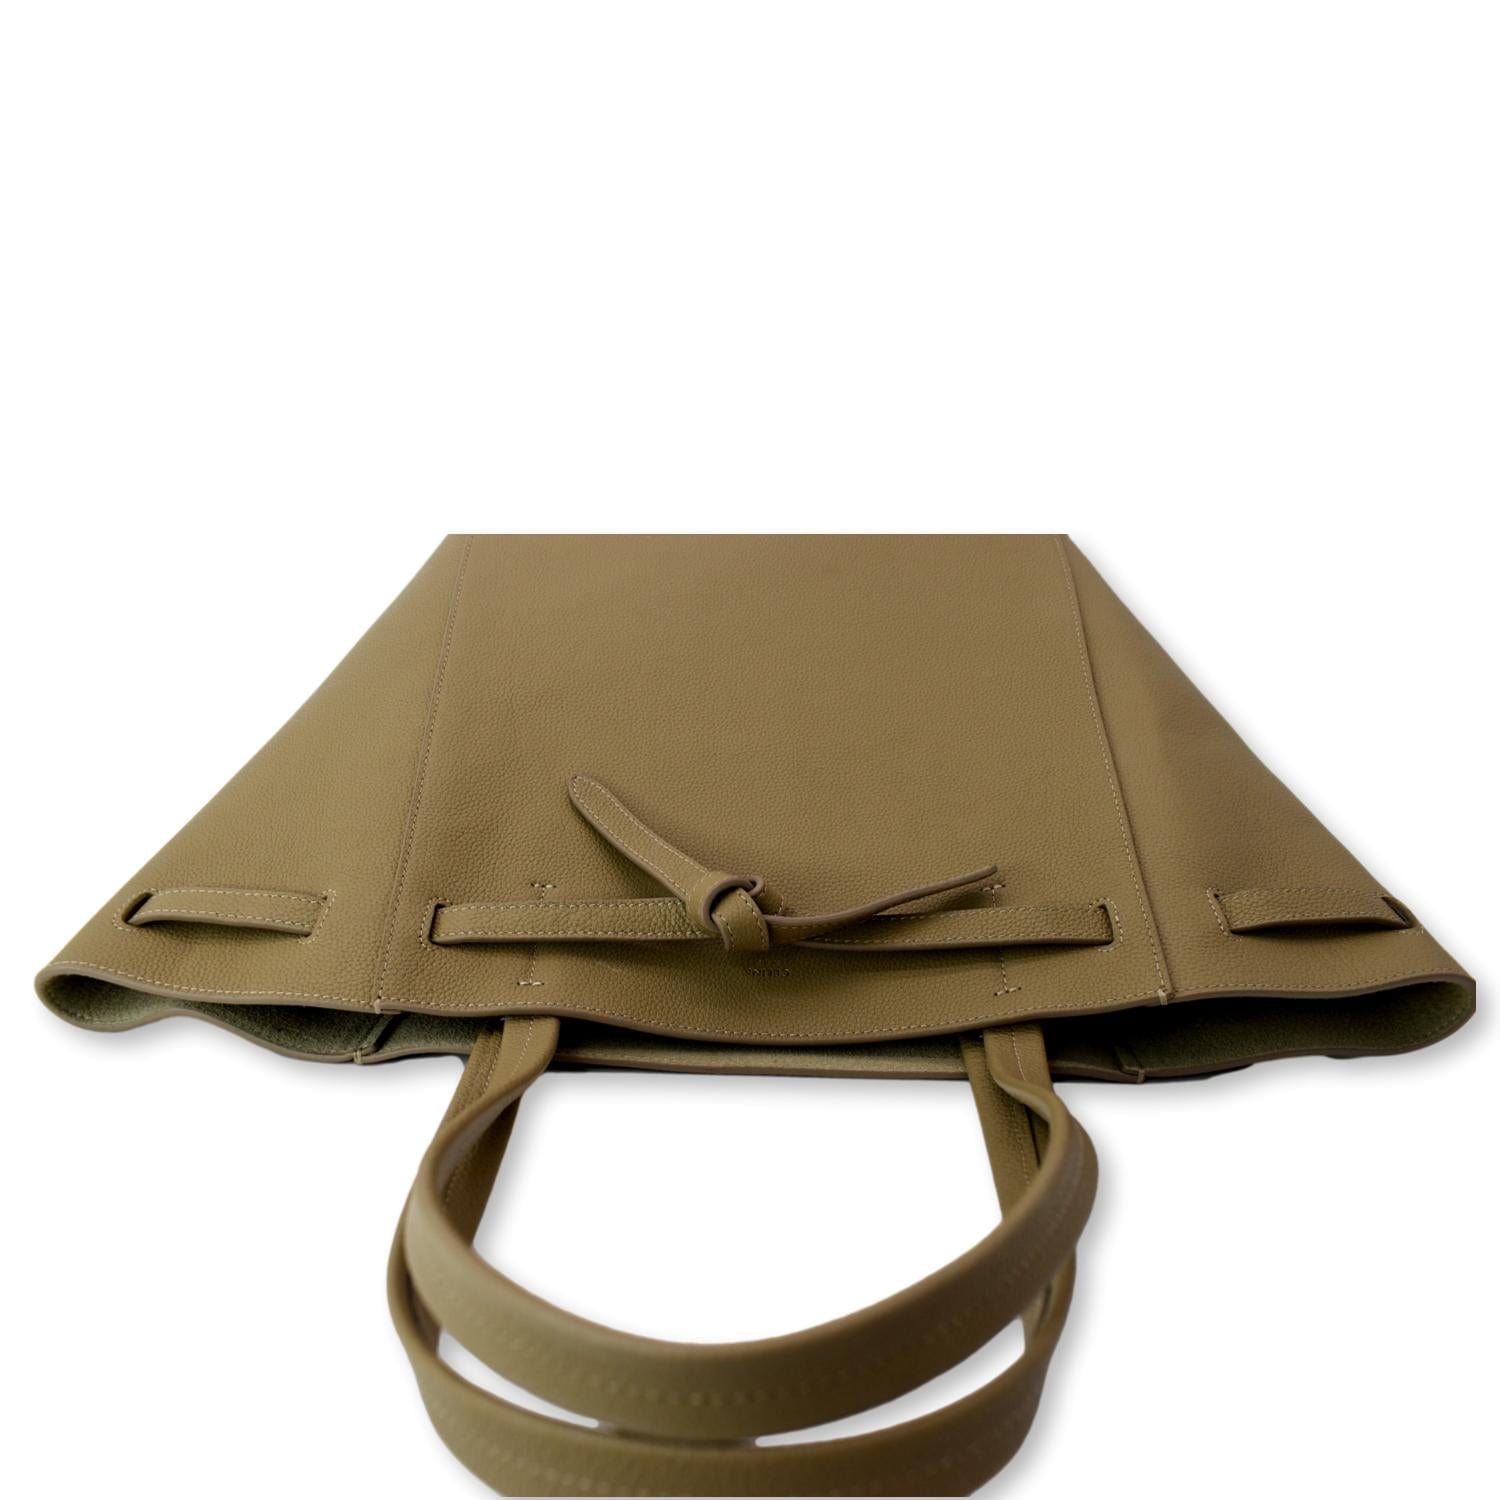 Celine - Authenticated Cabas Phantom Handbag - Leather Brown Plain for Women, Good Condition